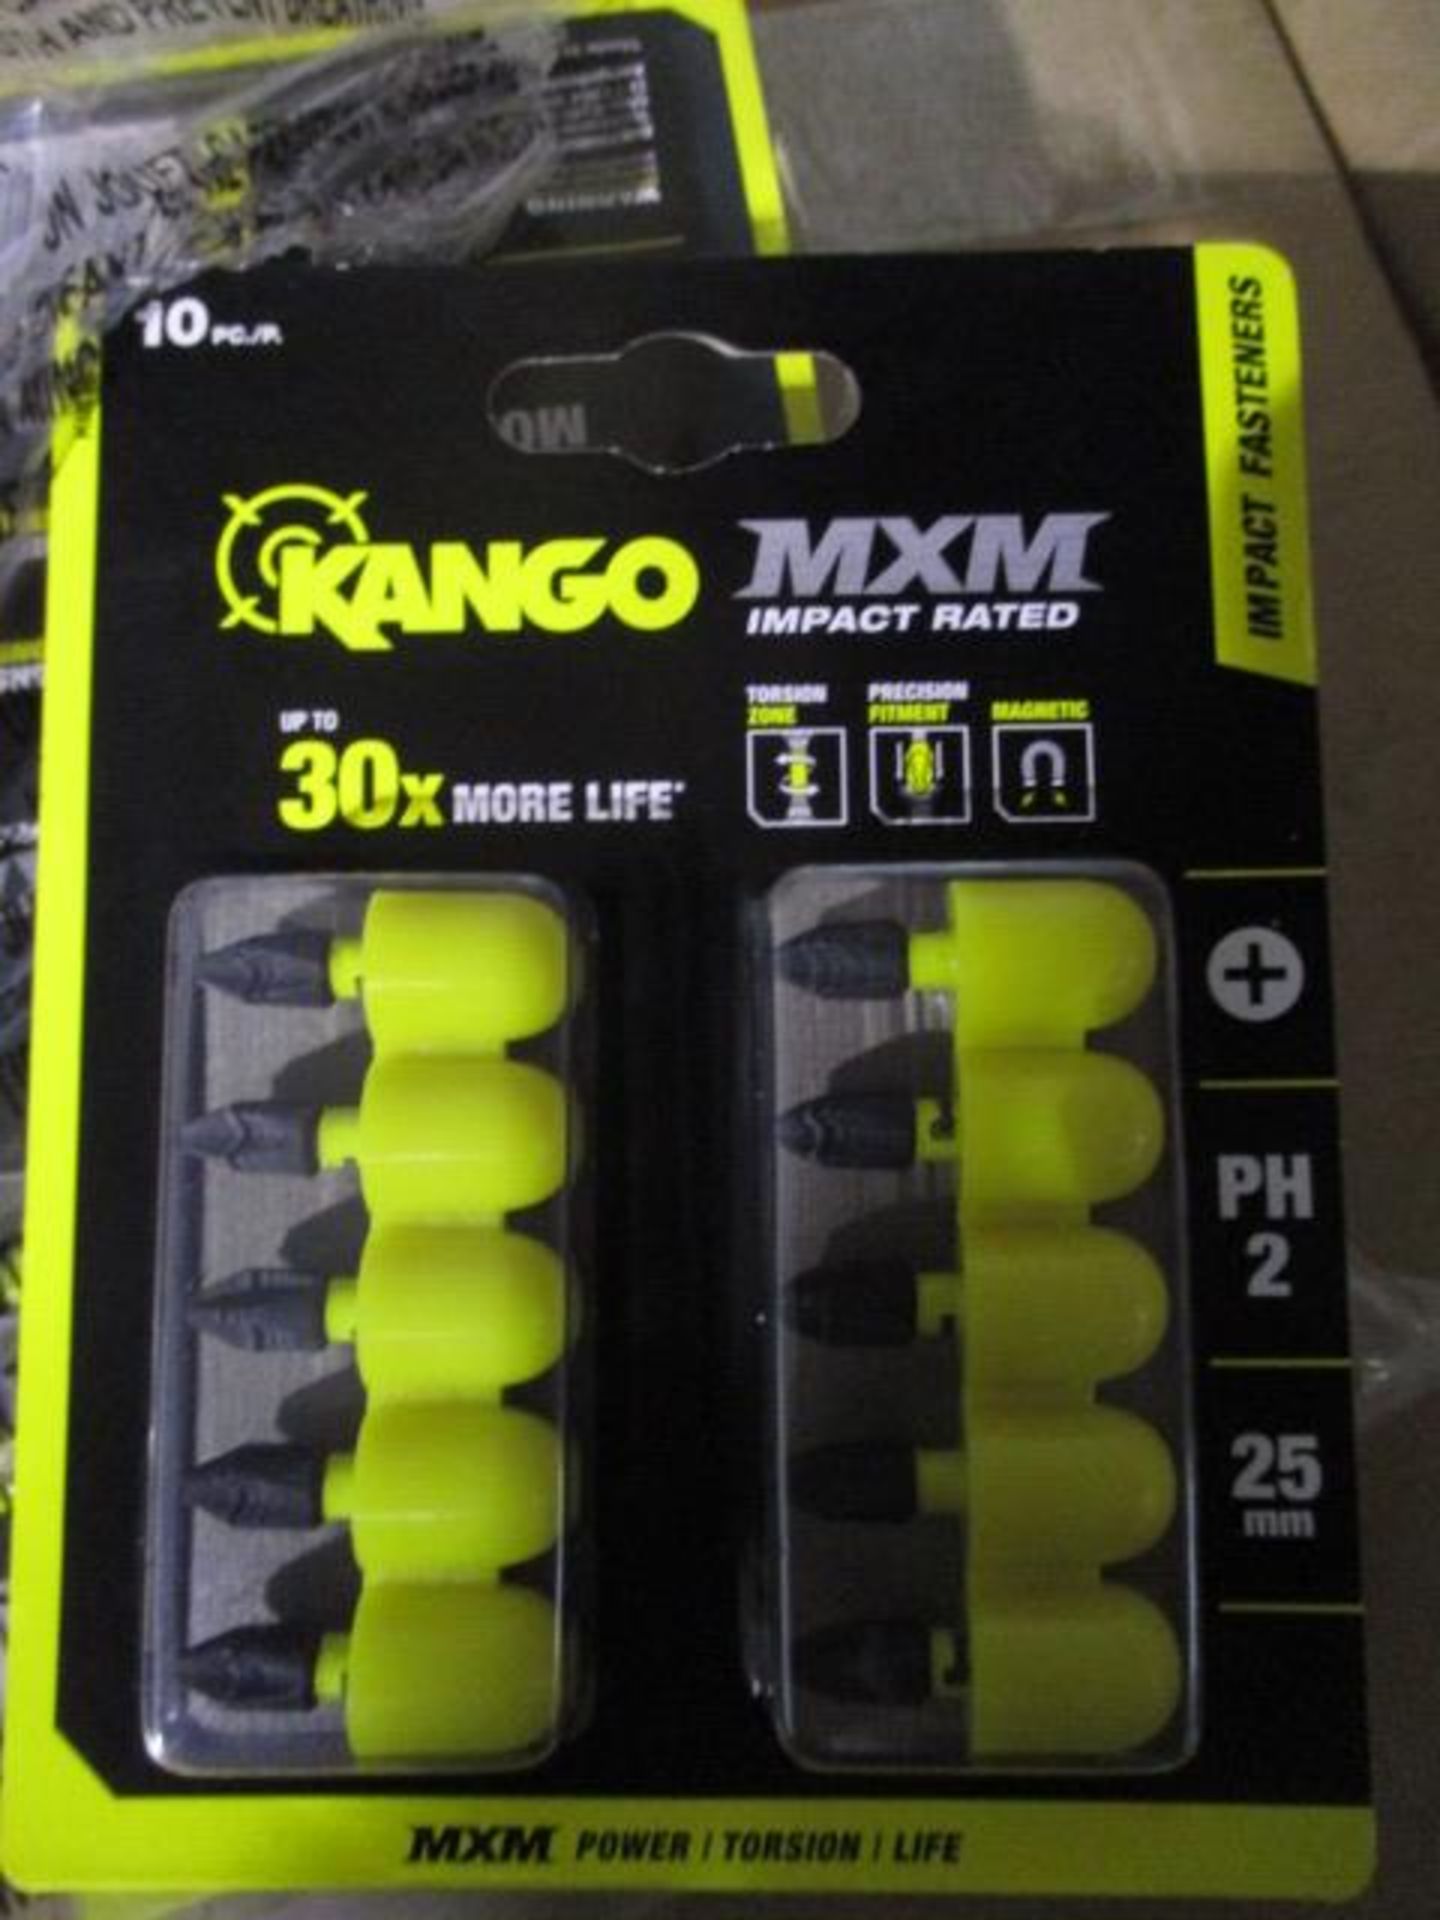 50. Kango proffessional high quality drill bits